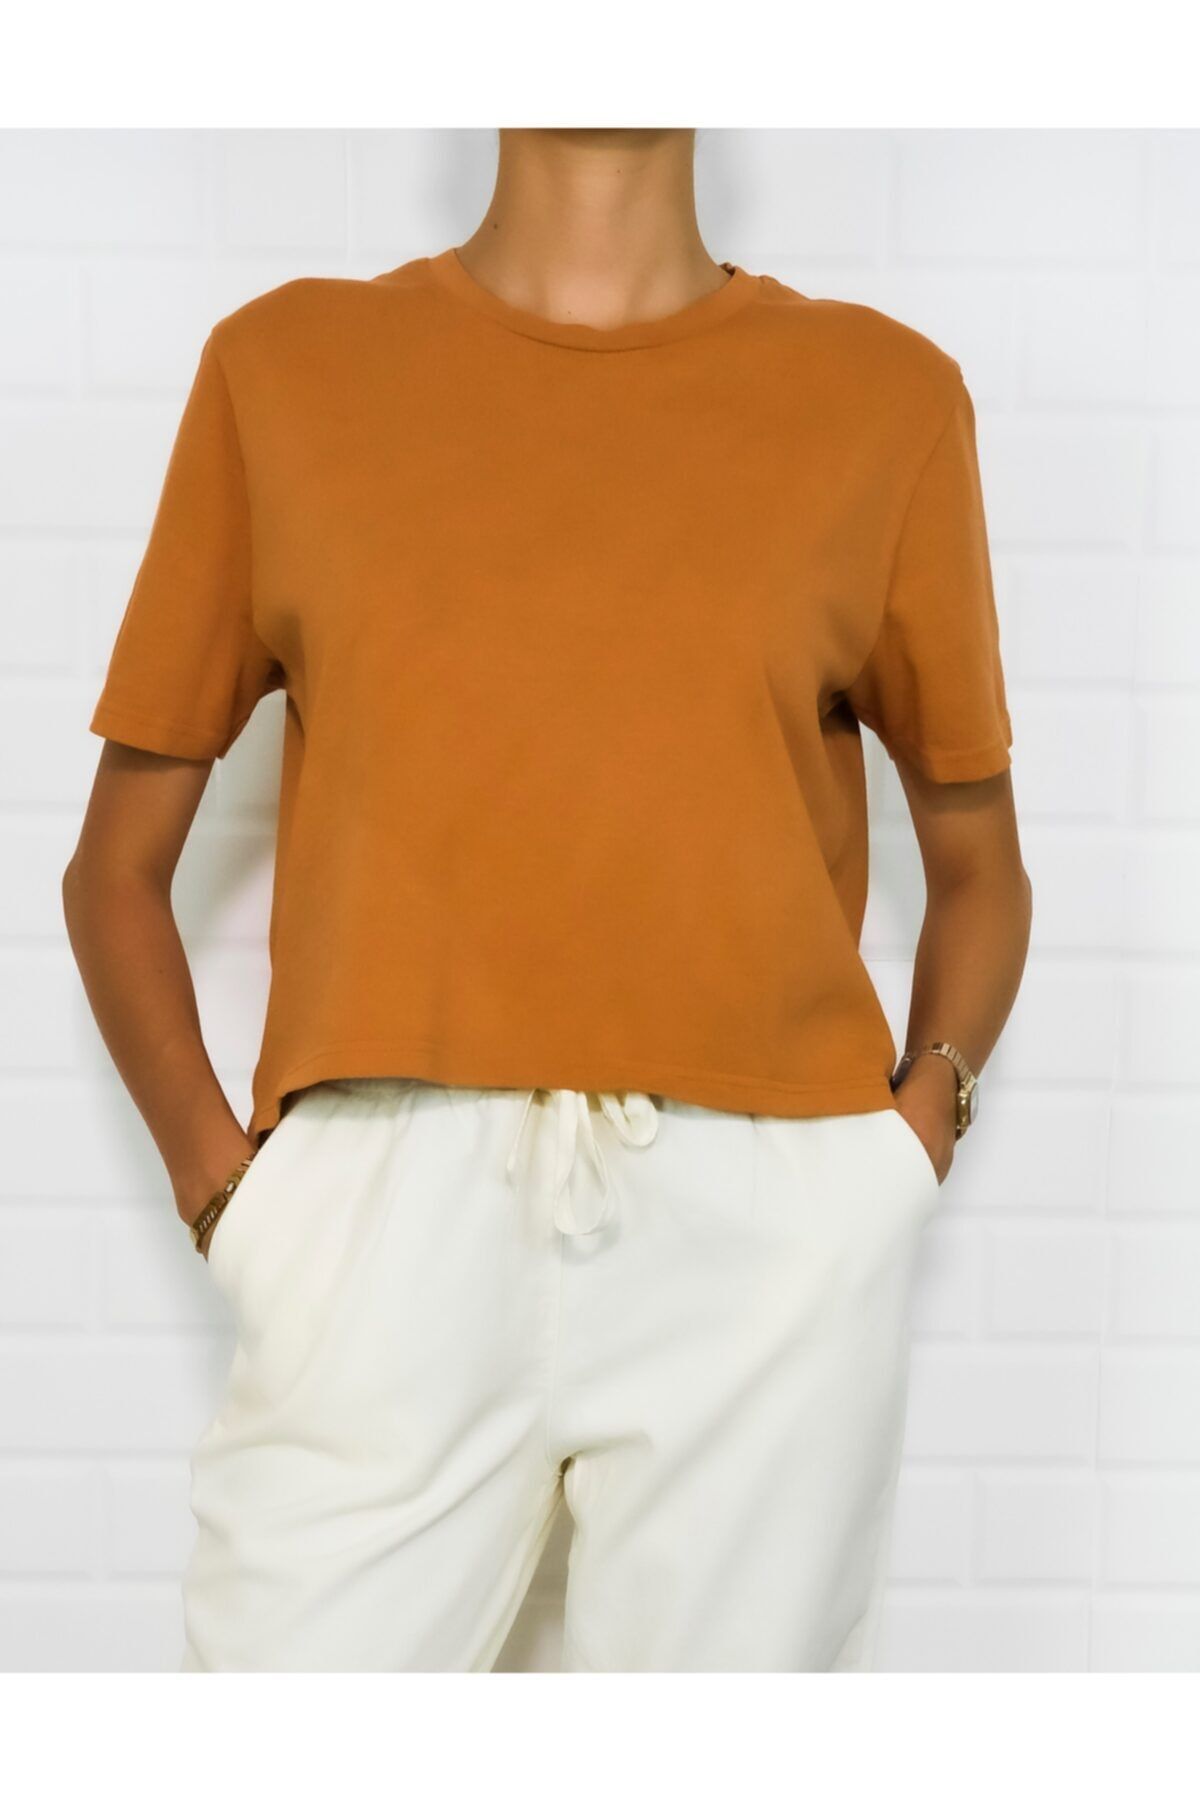 G&MORE boutique Önü Kısa Turuncu Tshirt